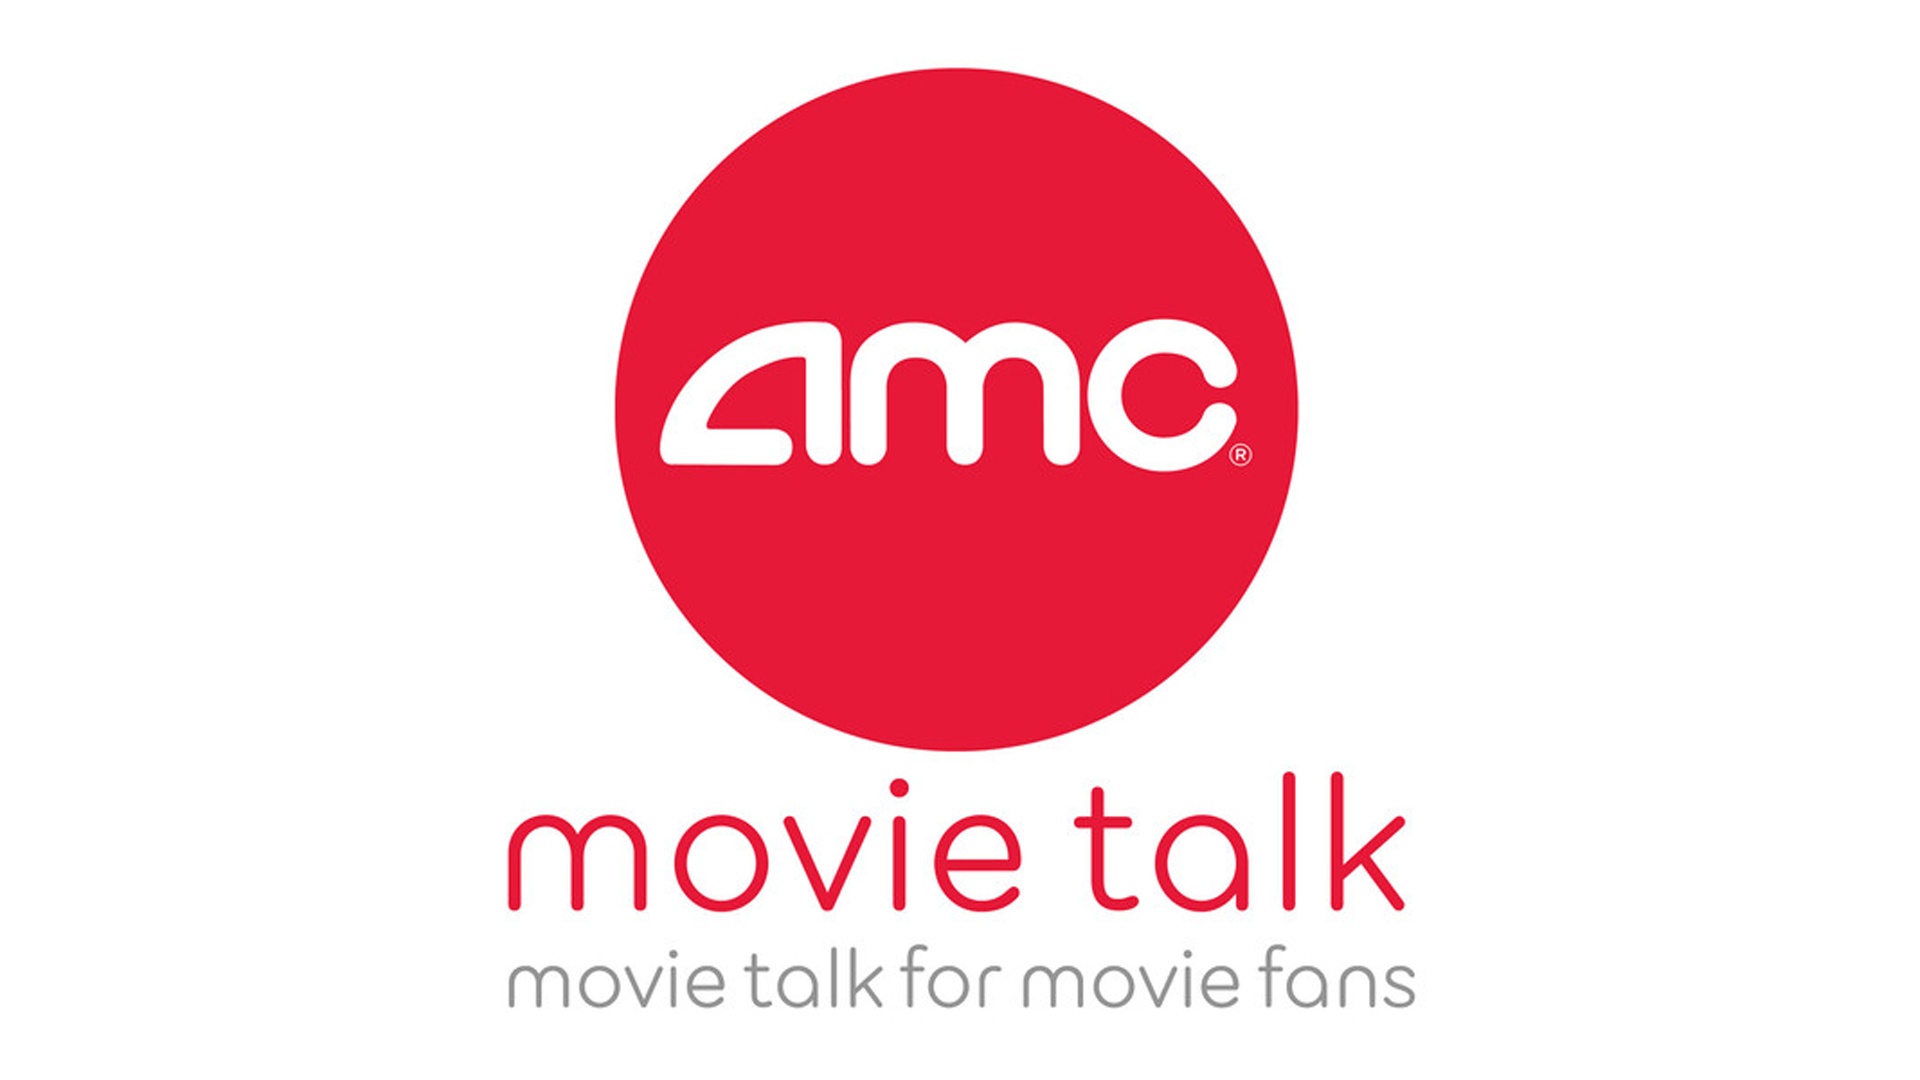 AMC Movie Talk